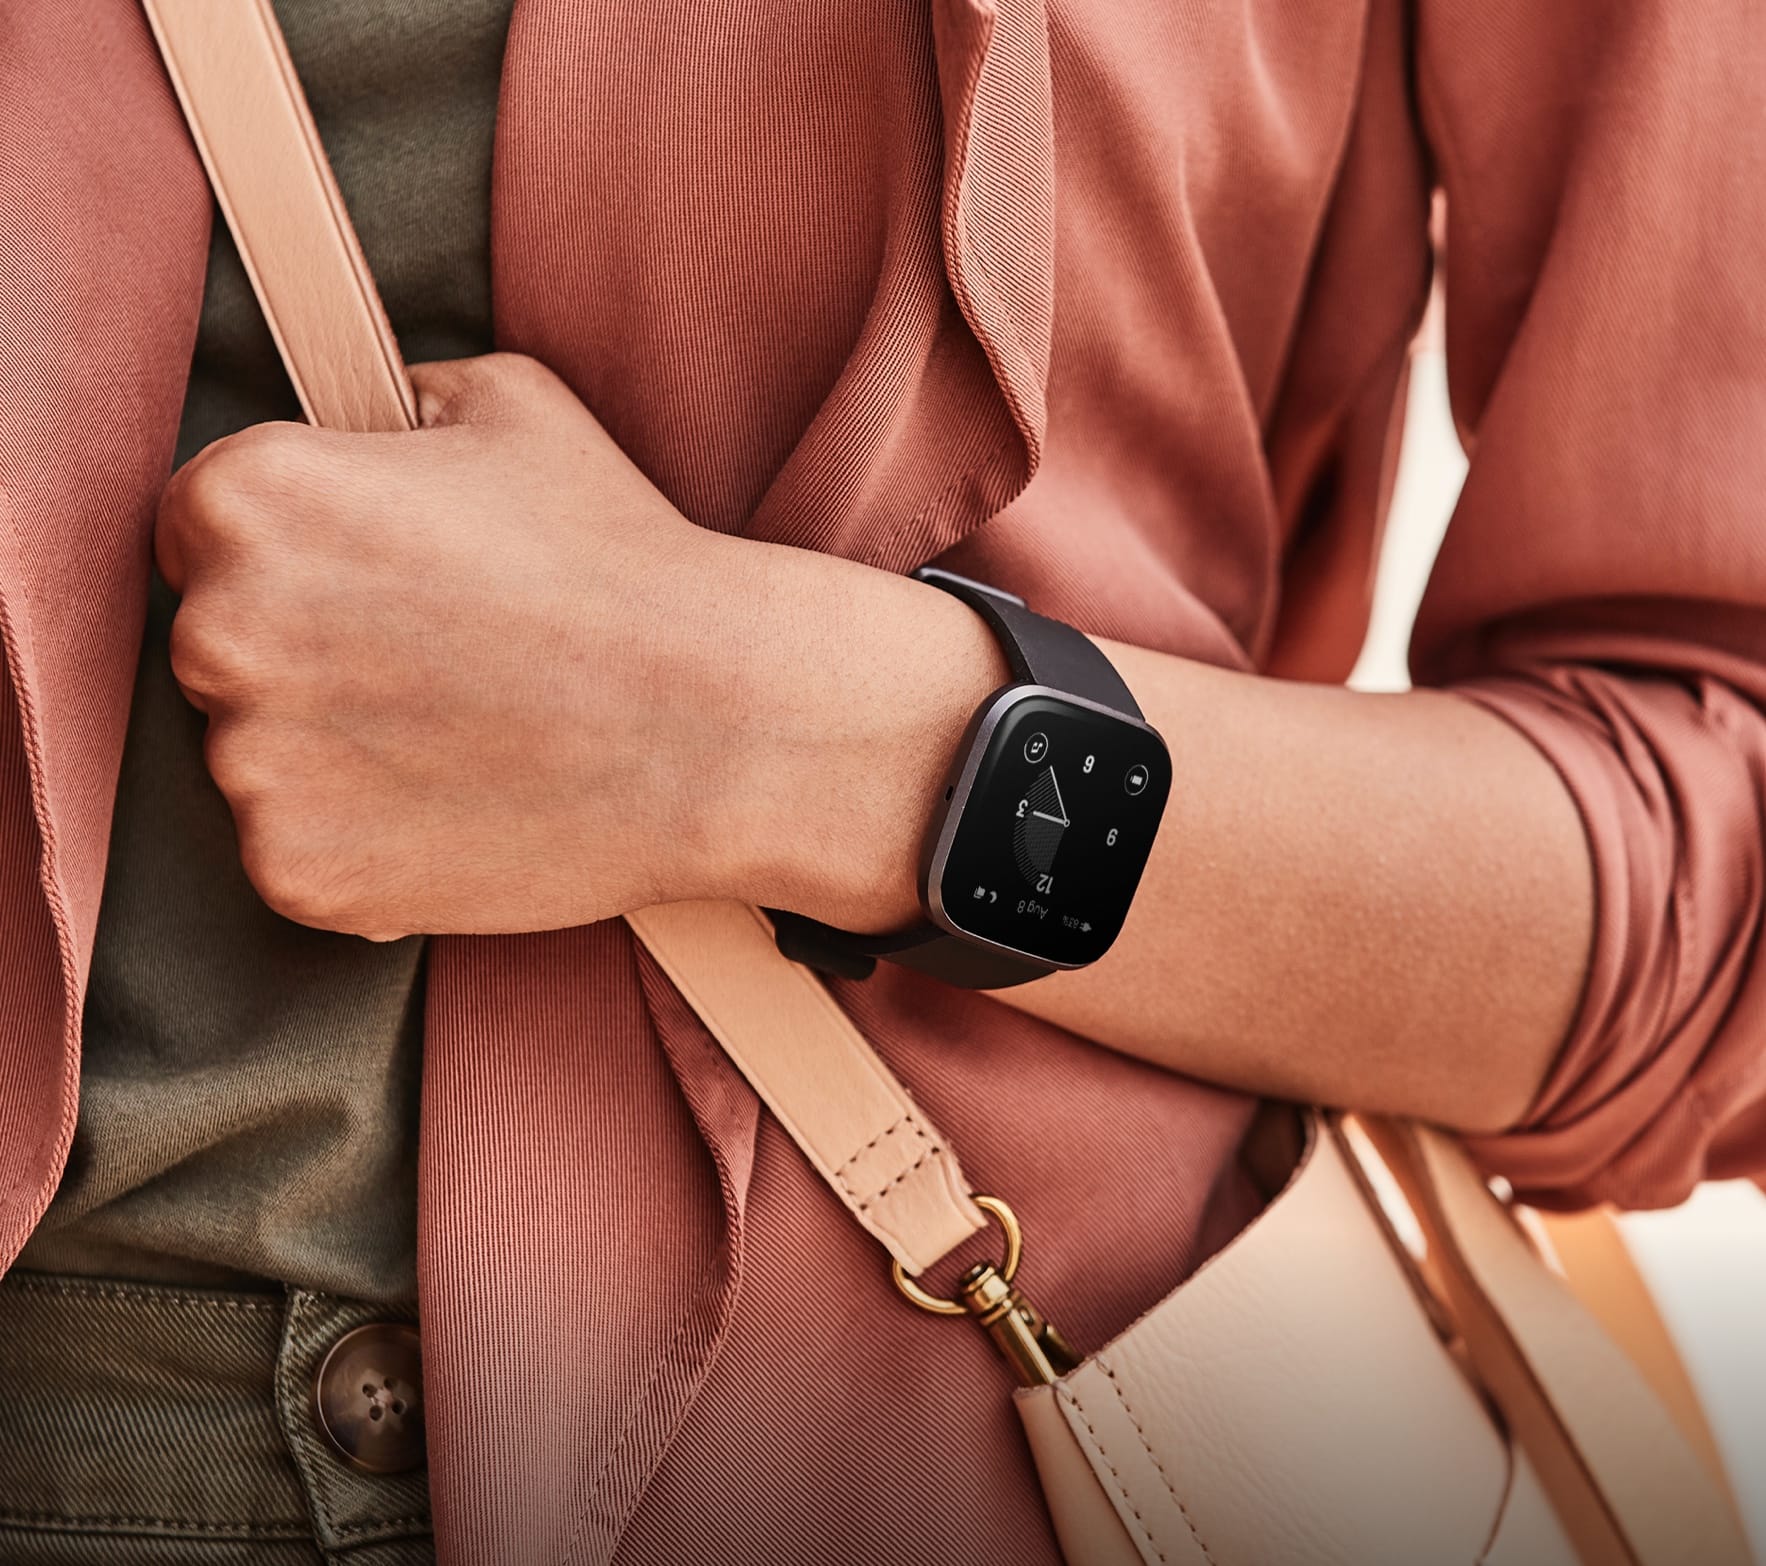 USA Fitbit versa 2 Health & Fitness Smartwatch black in box activity tracker 